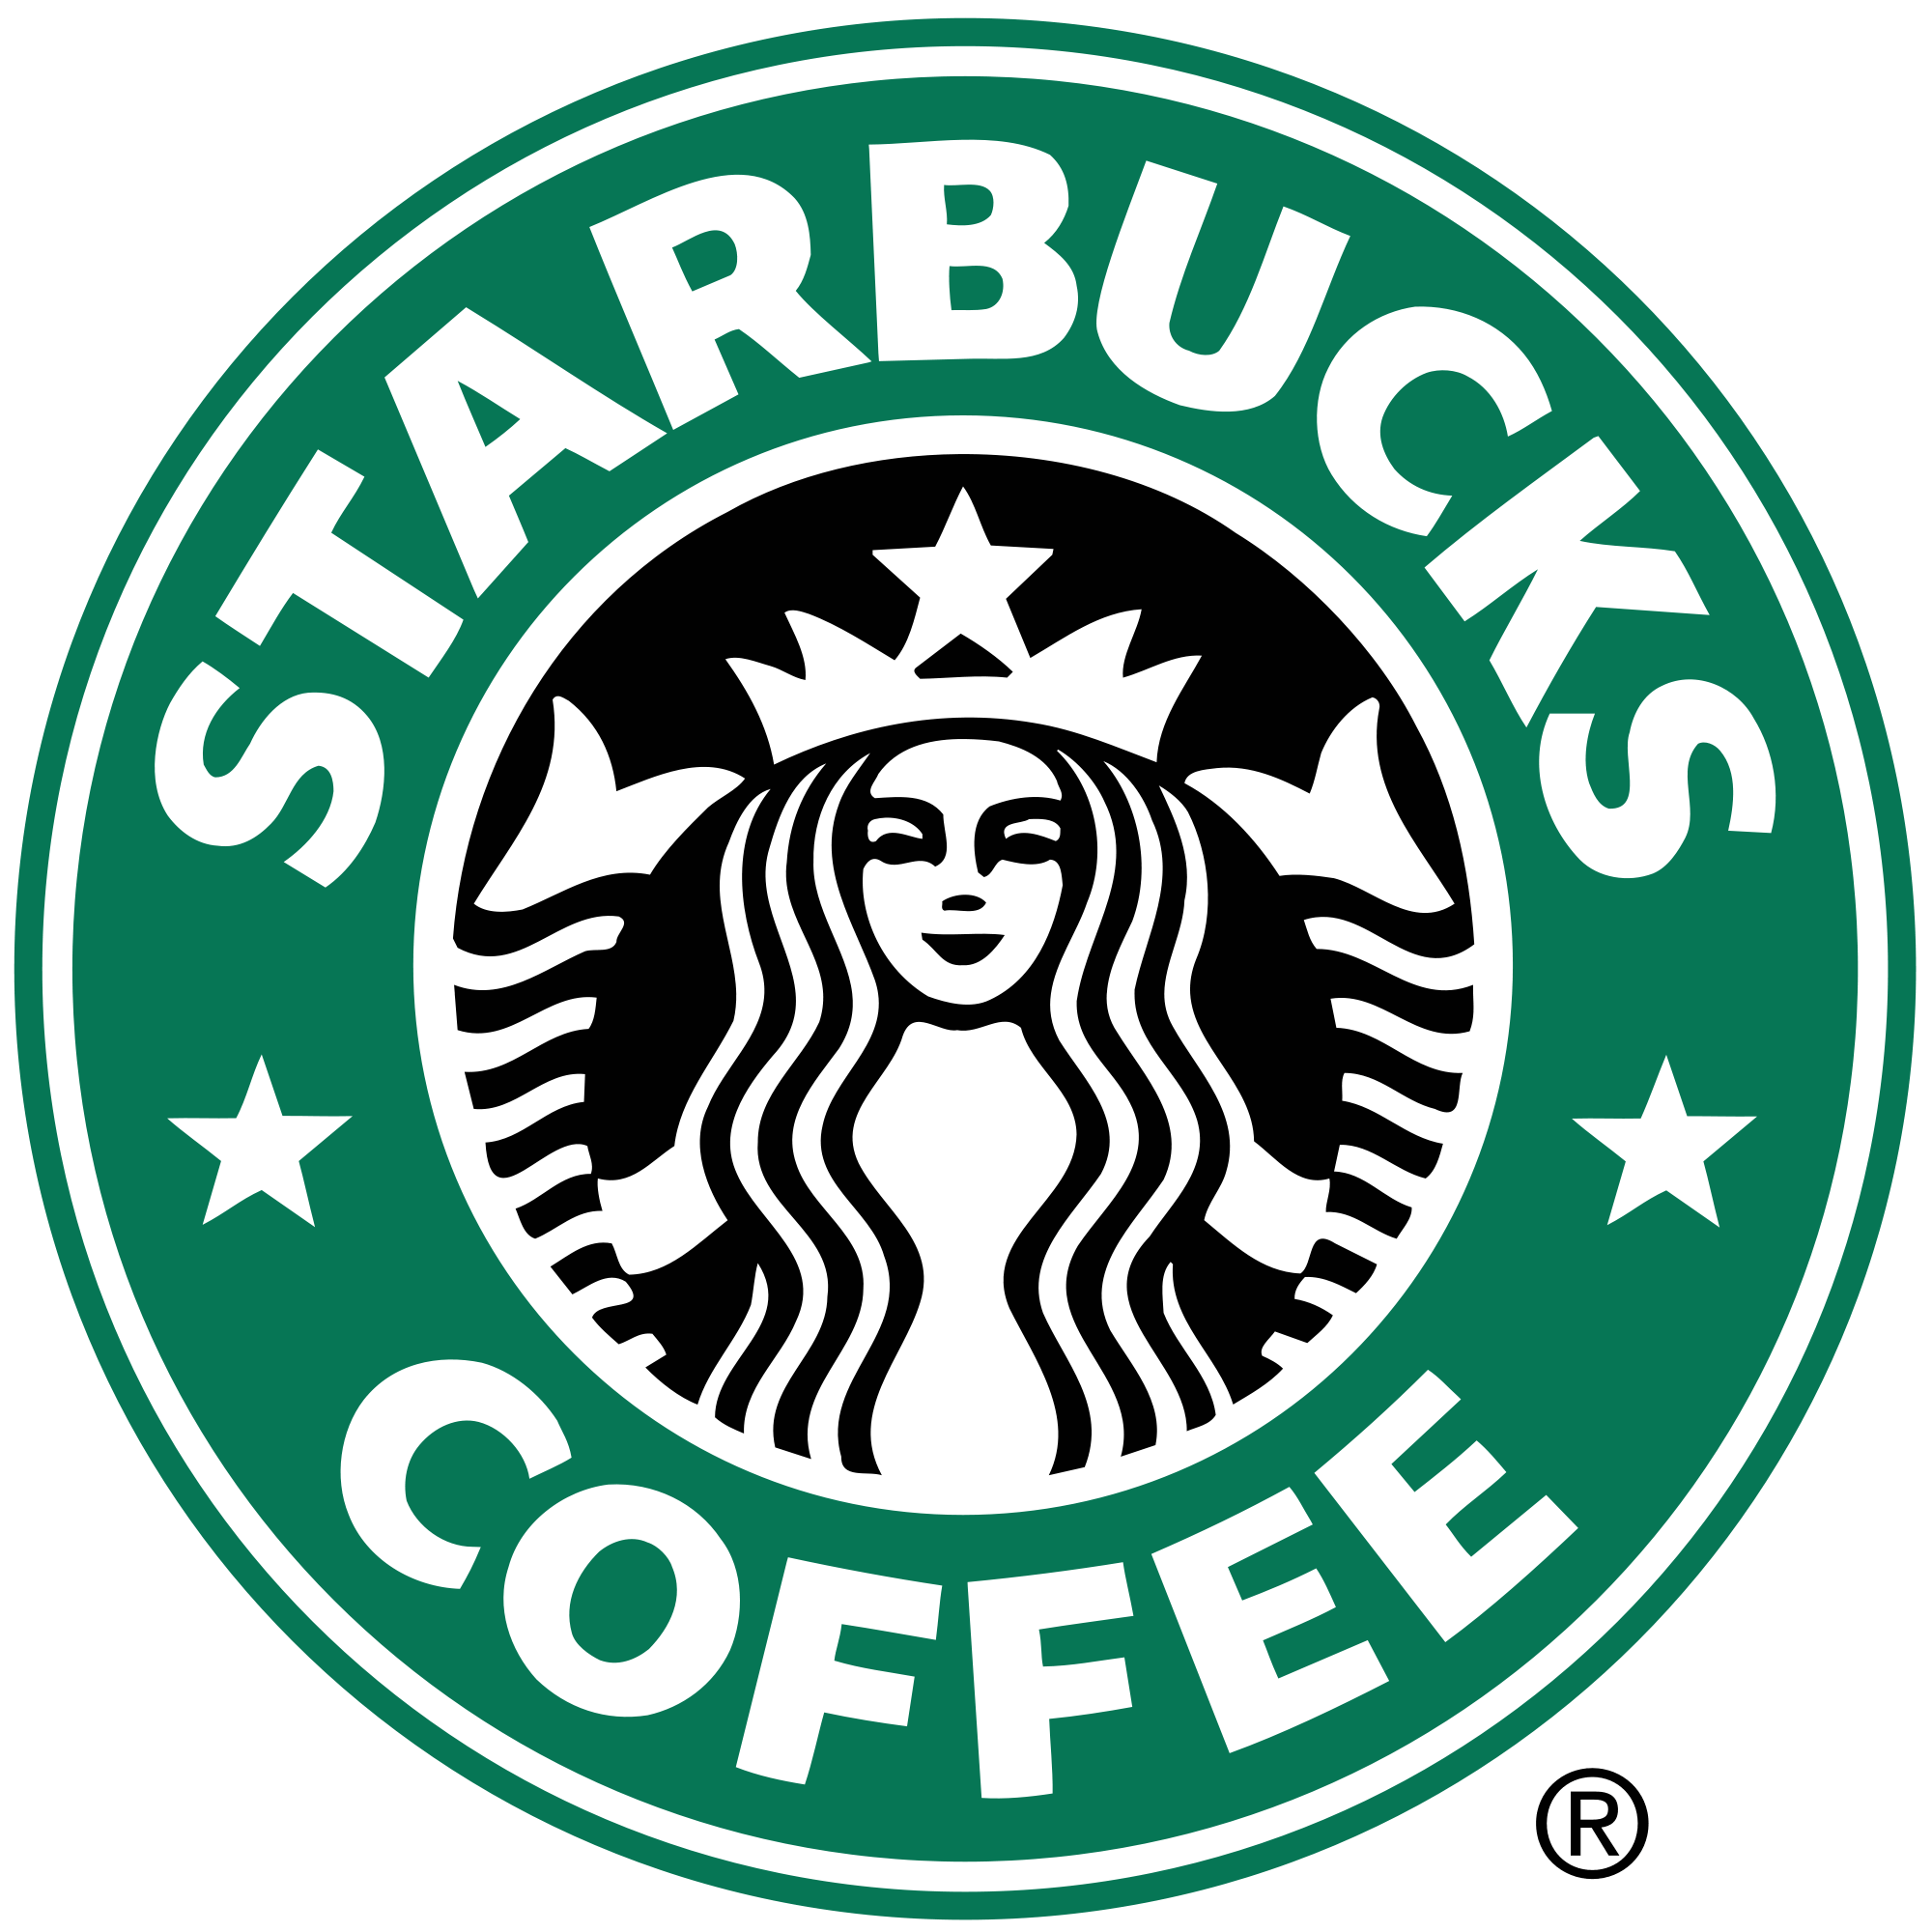 Starbucks Coffee Logo - Image - Starbucks Coffee Logo.svg.png | Logopedia | FANDOM powered ...